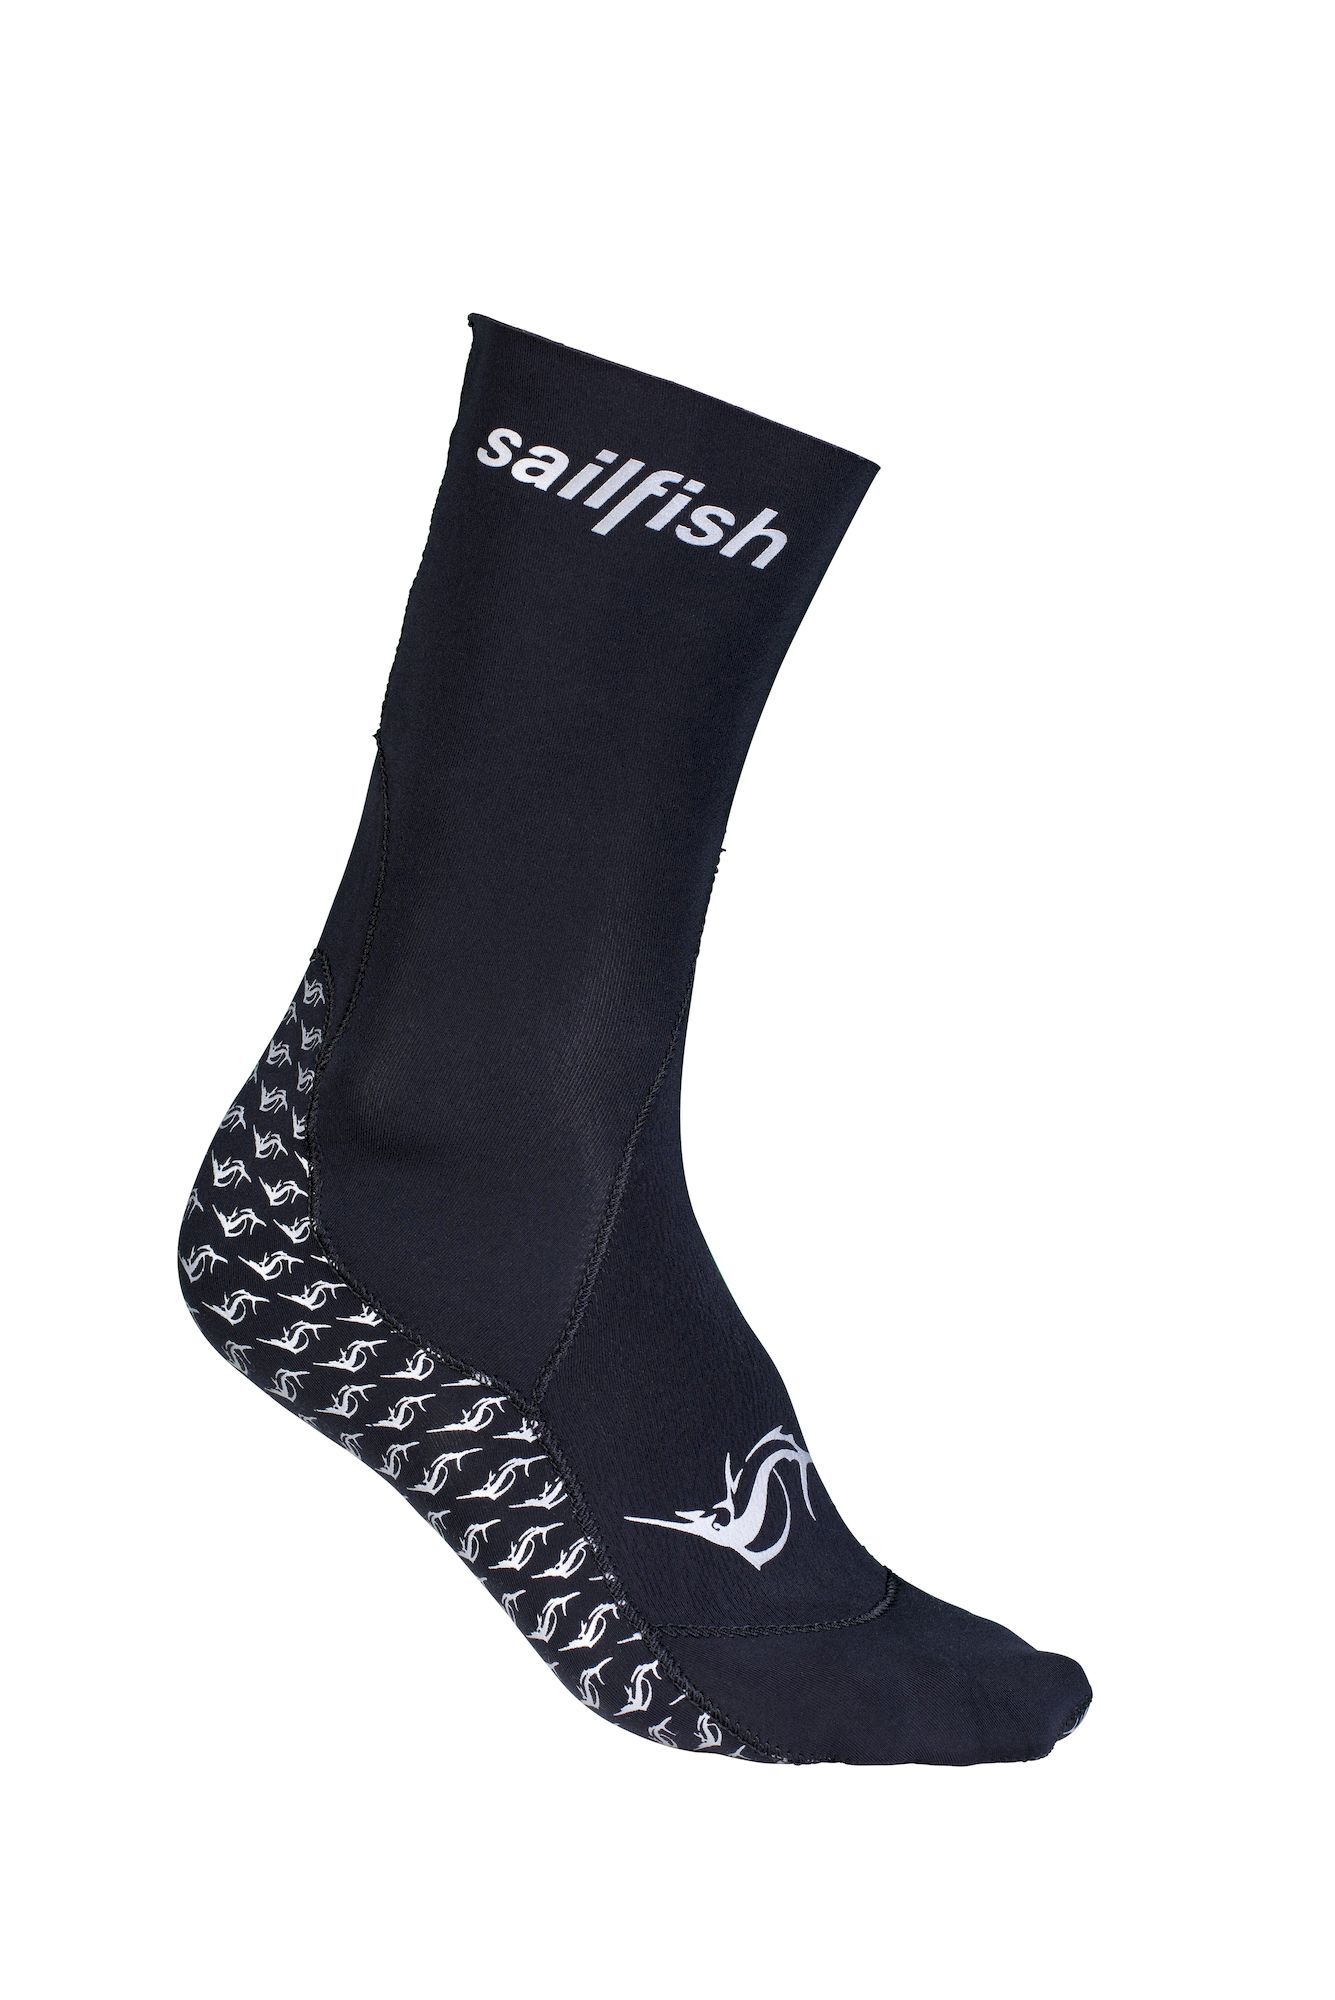 Sailfish Neoprene Socks - Neopren sko | Hardloop